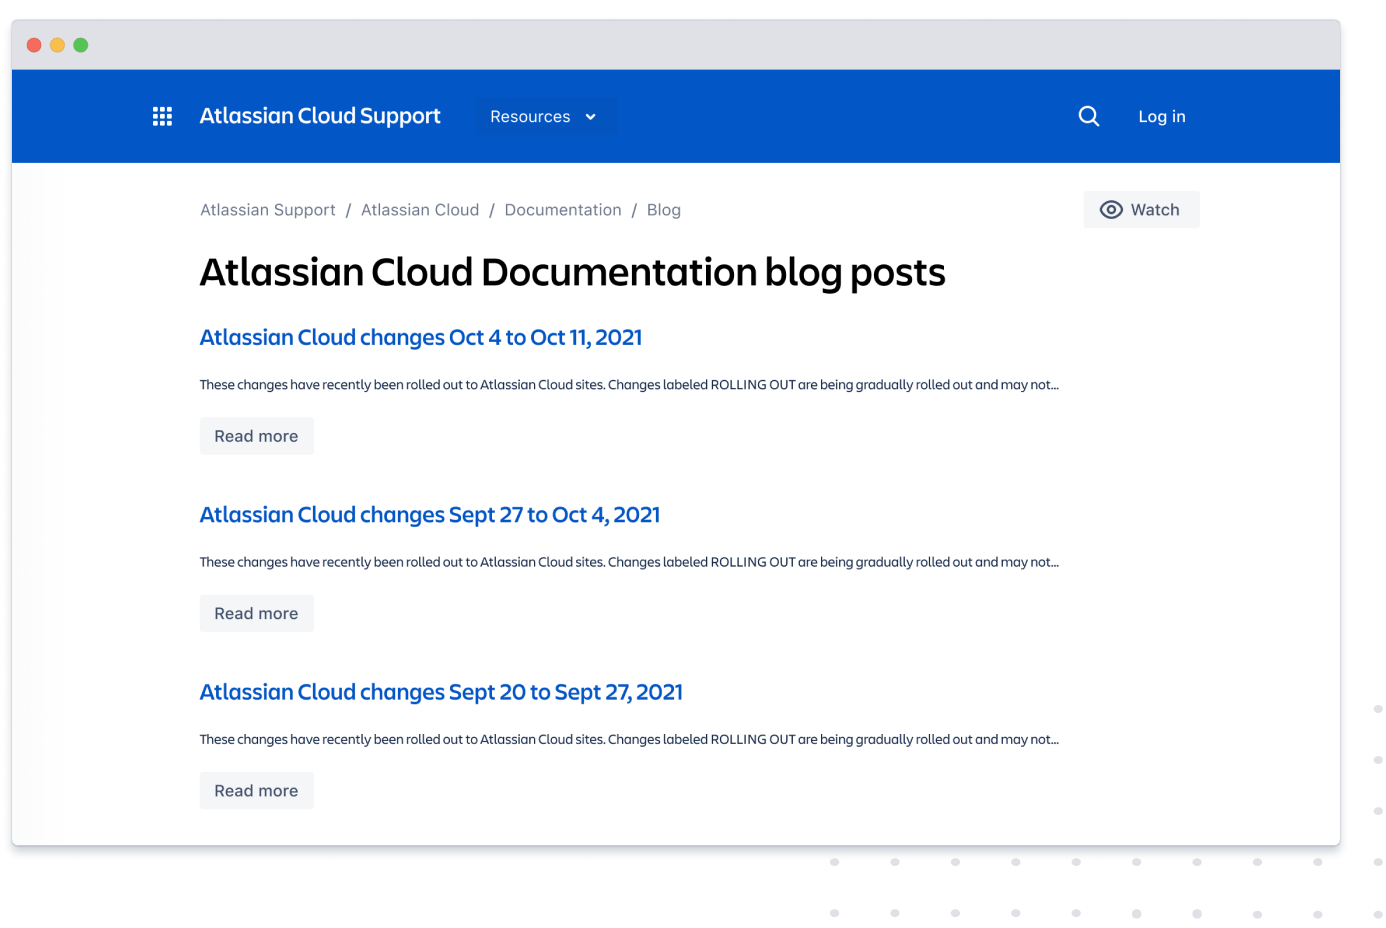 Снимок экрана: страница блога с заметками о релизах Atlassian Cloud.